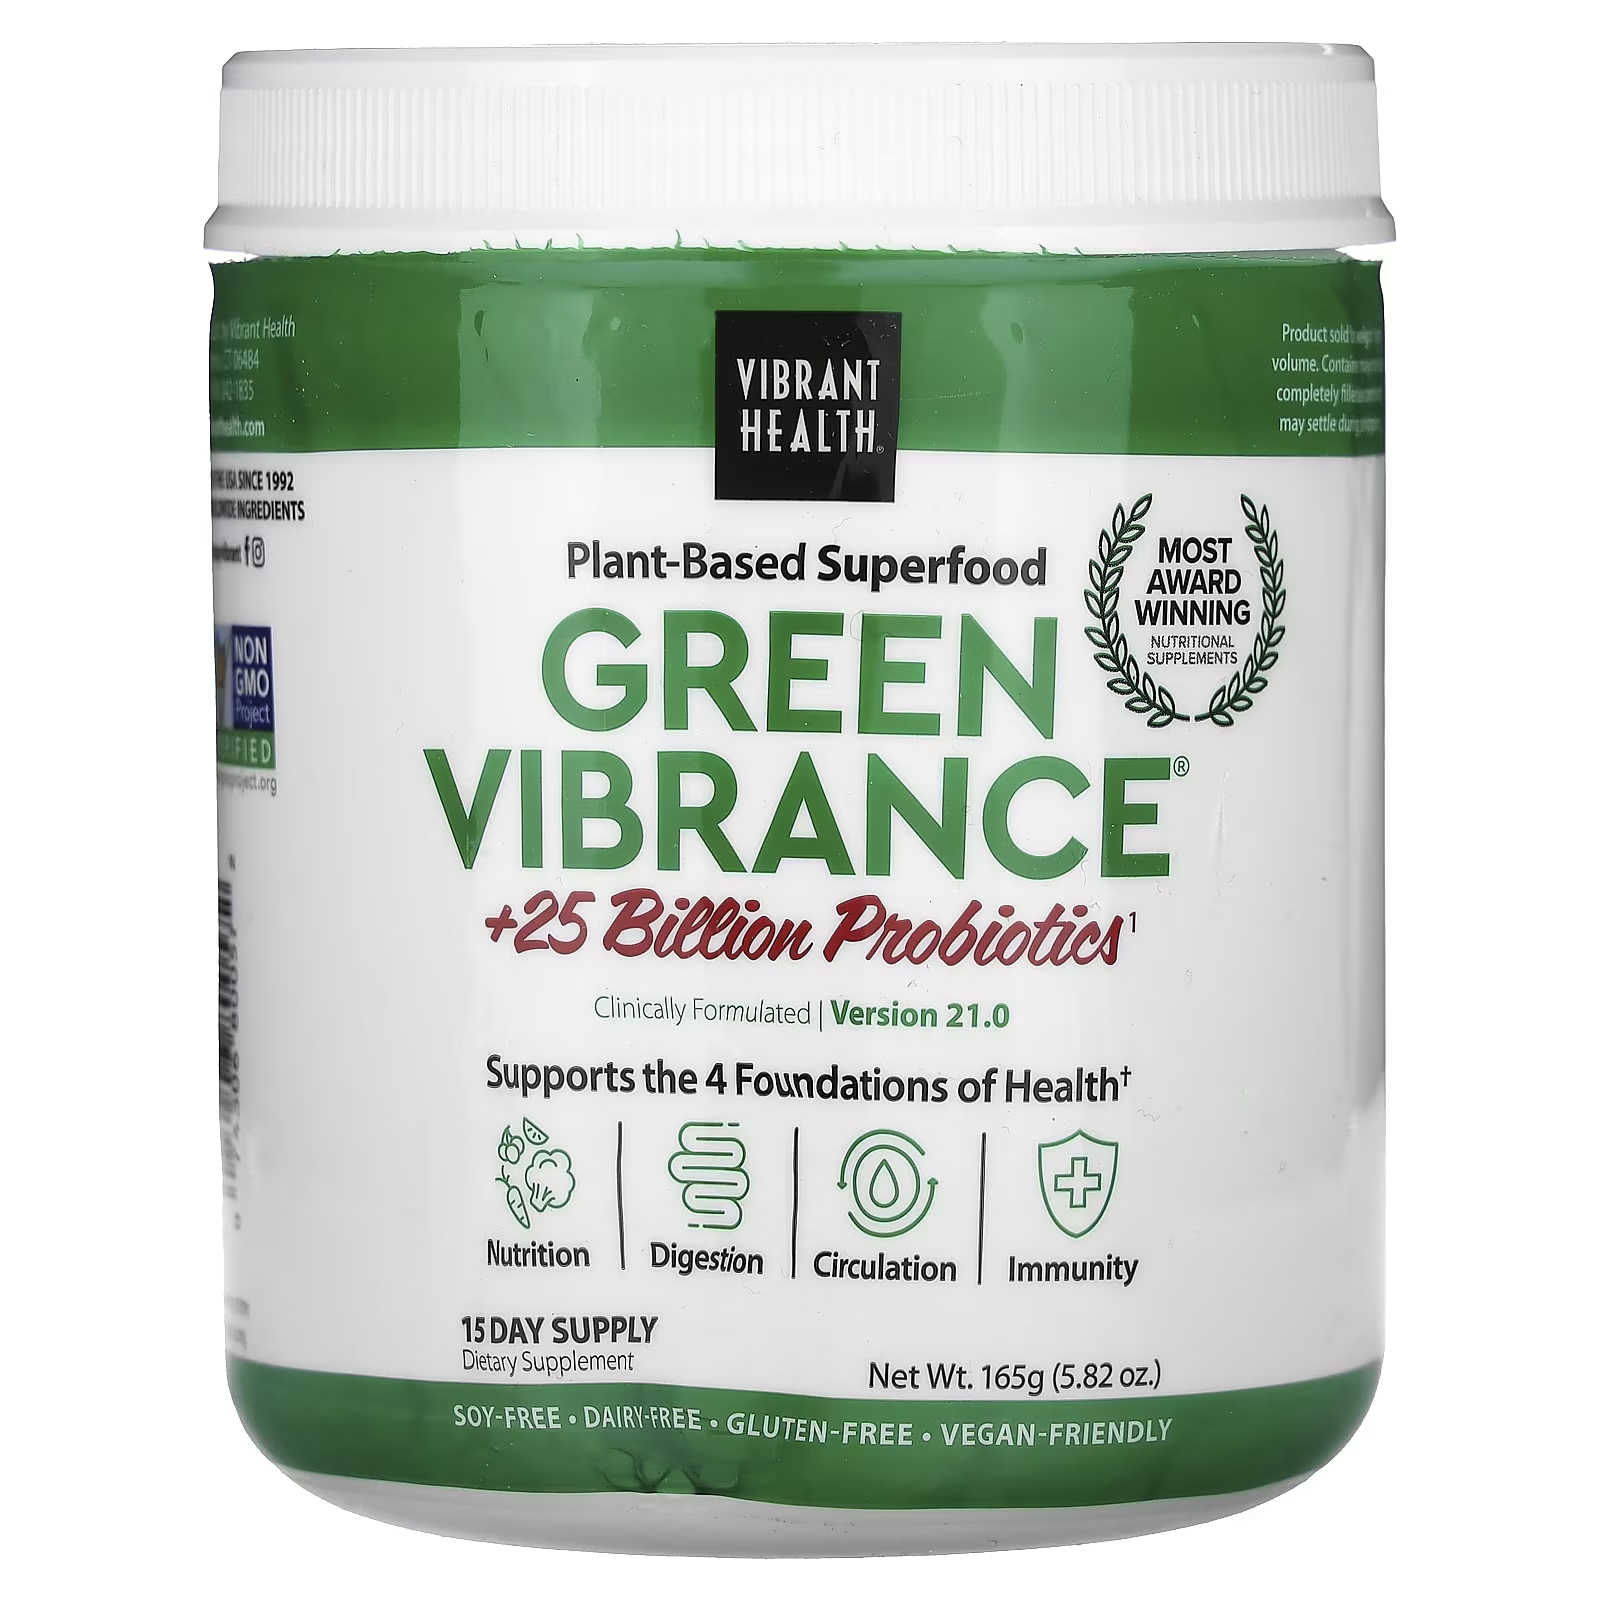 Пищевая добавка Vibrant Health Green Vibrance +25 миллиардов пробиотиков, 165 г vibrant health green vibrance 25 млрд пробиотиков версия 18 0 913 г 32 21 унции